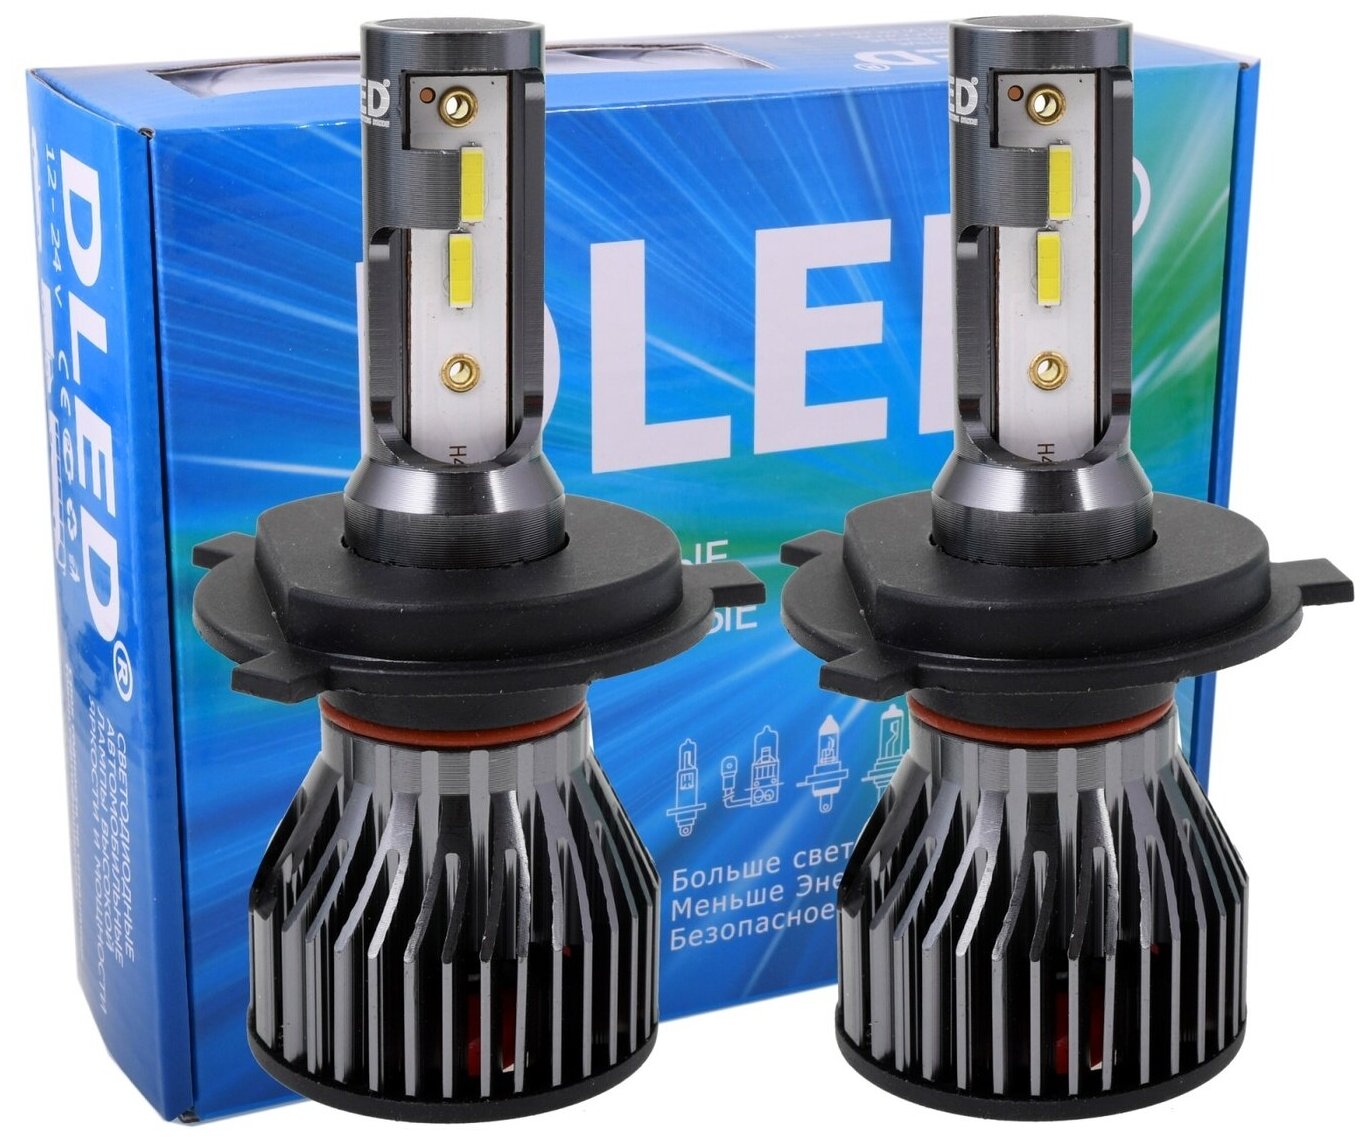 Автомобильная светодиодная лампа H4 DLED Ultimate S (Комплект 2 лампы)